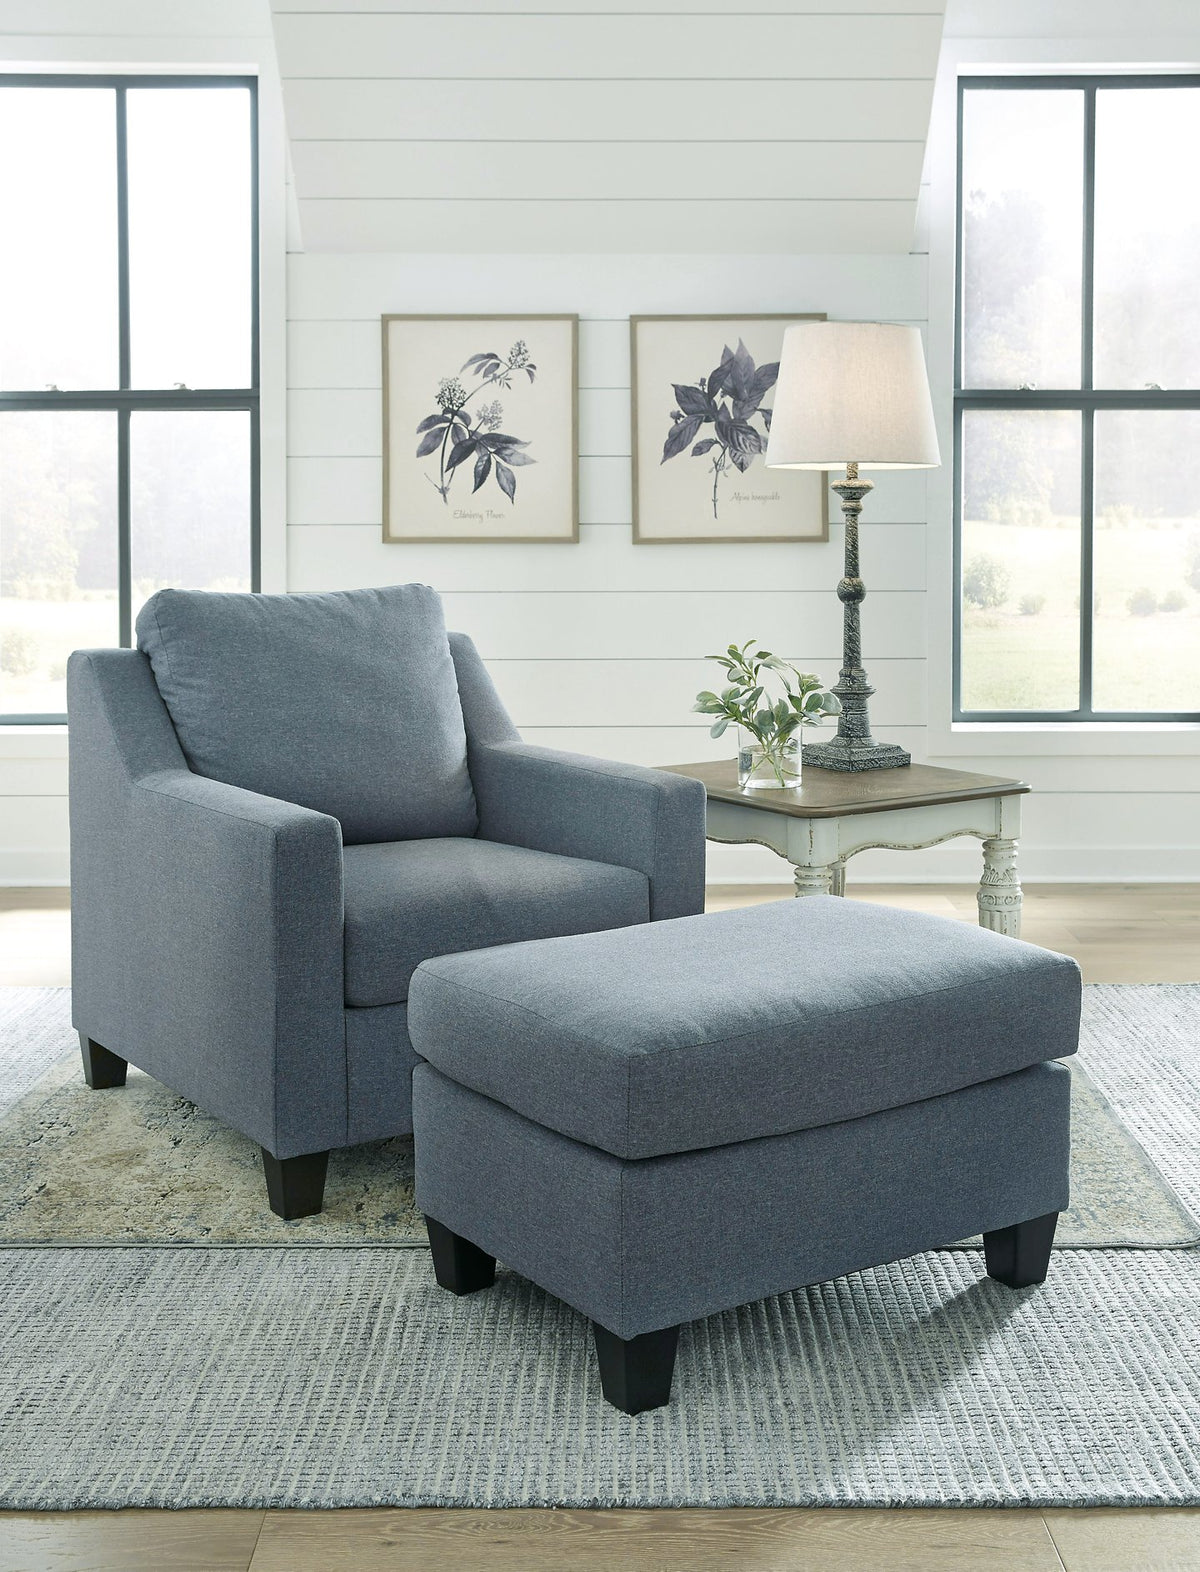 Lemly Living Room Set - Half Price Furniture